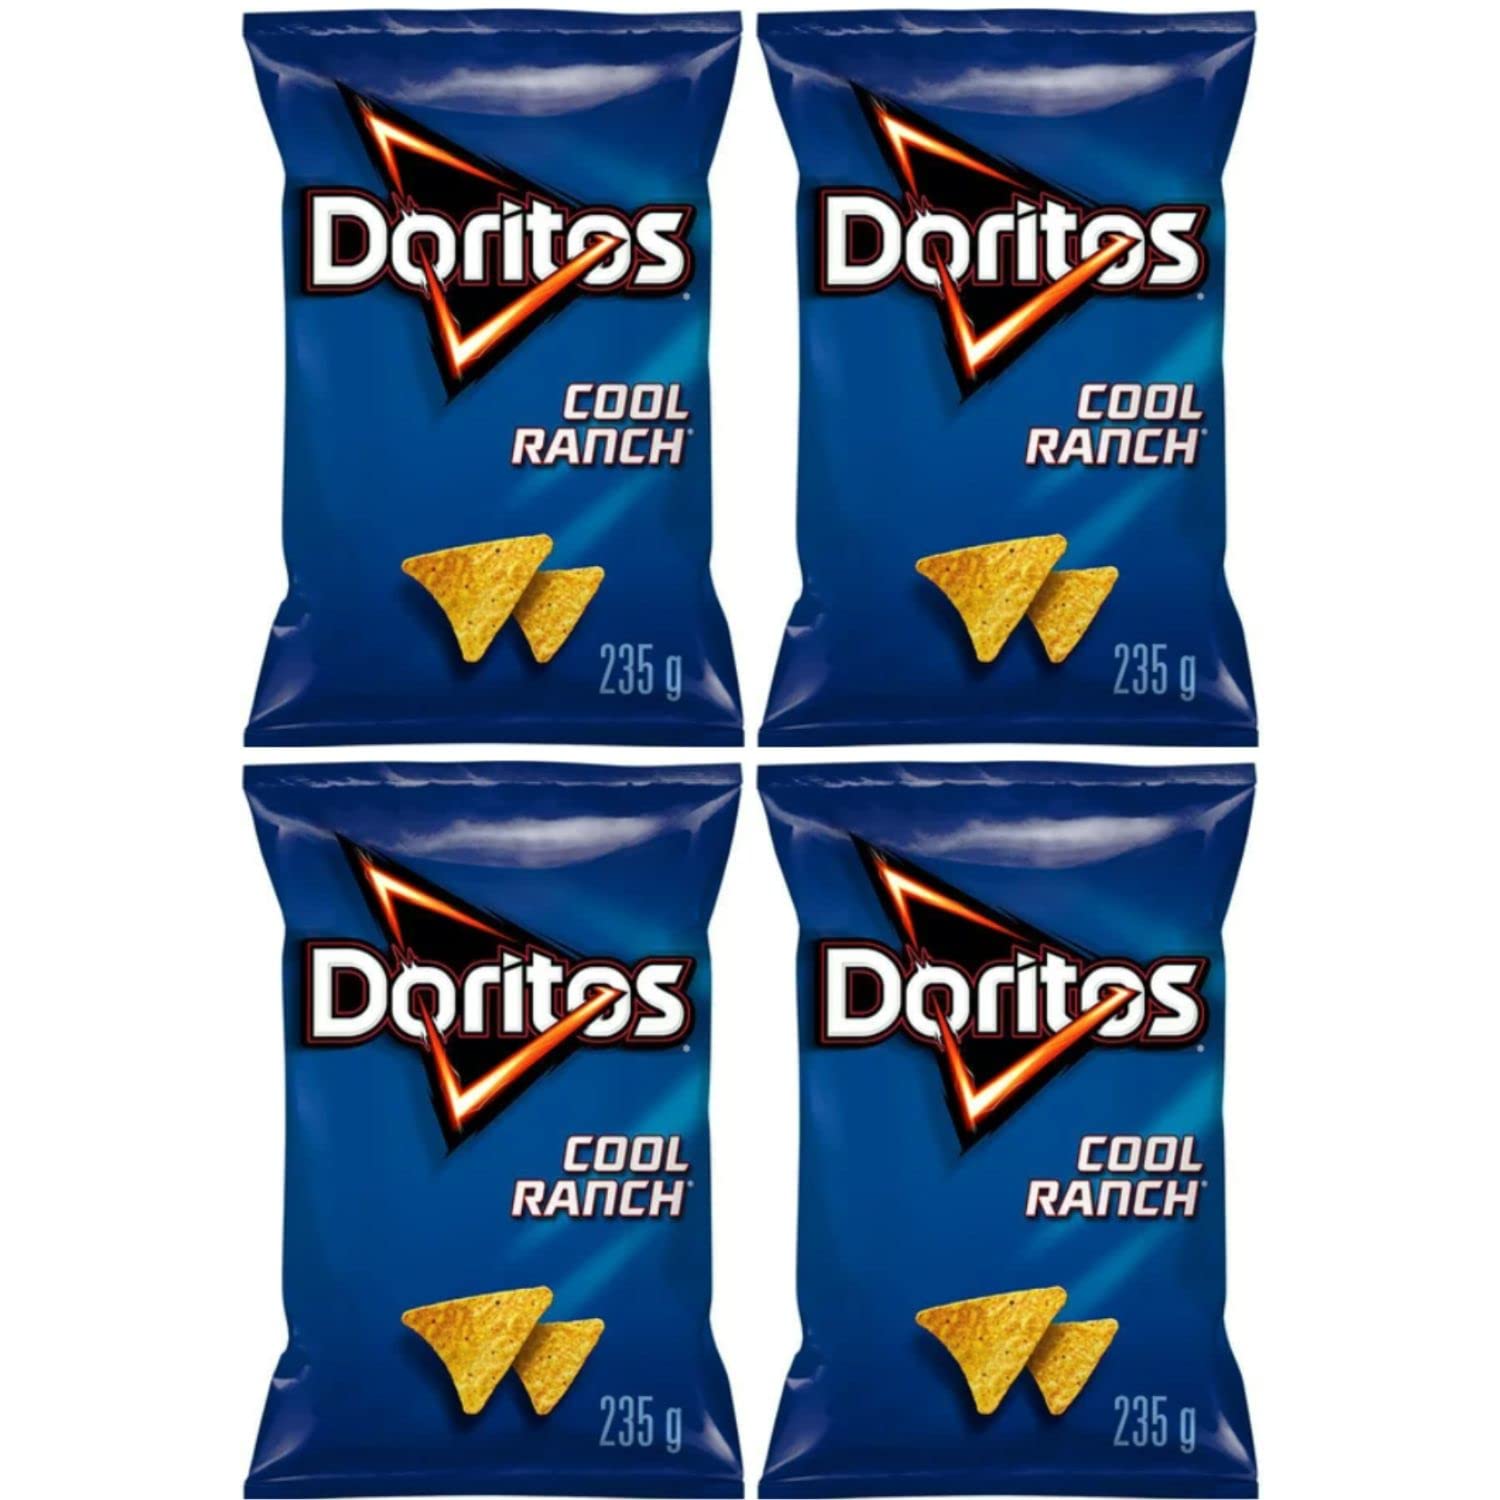 Doritos Cool Ranch Tortilla Chips pack of 4